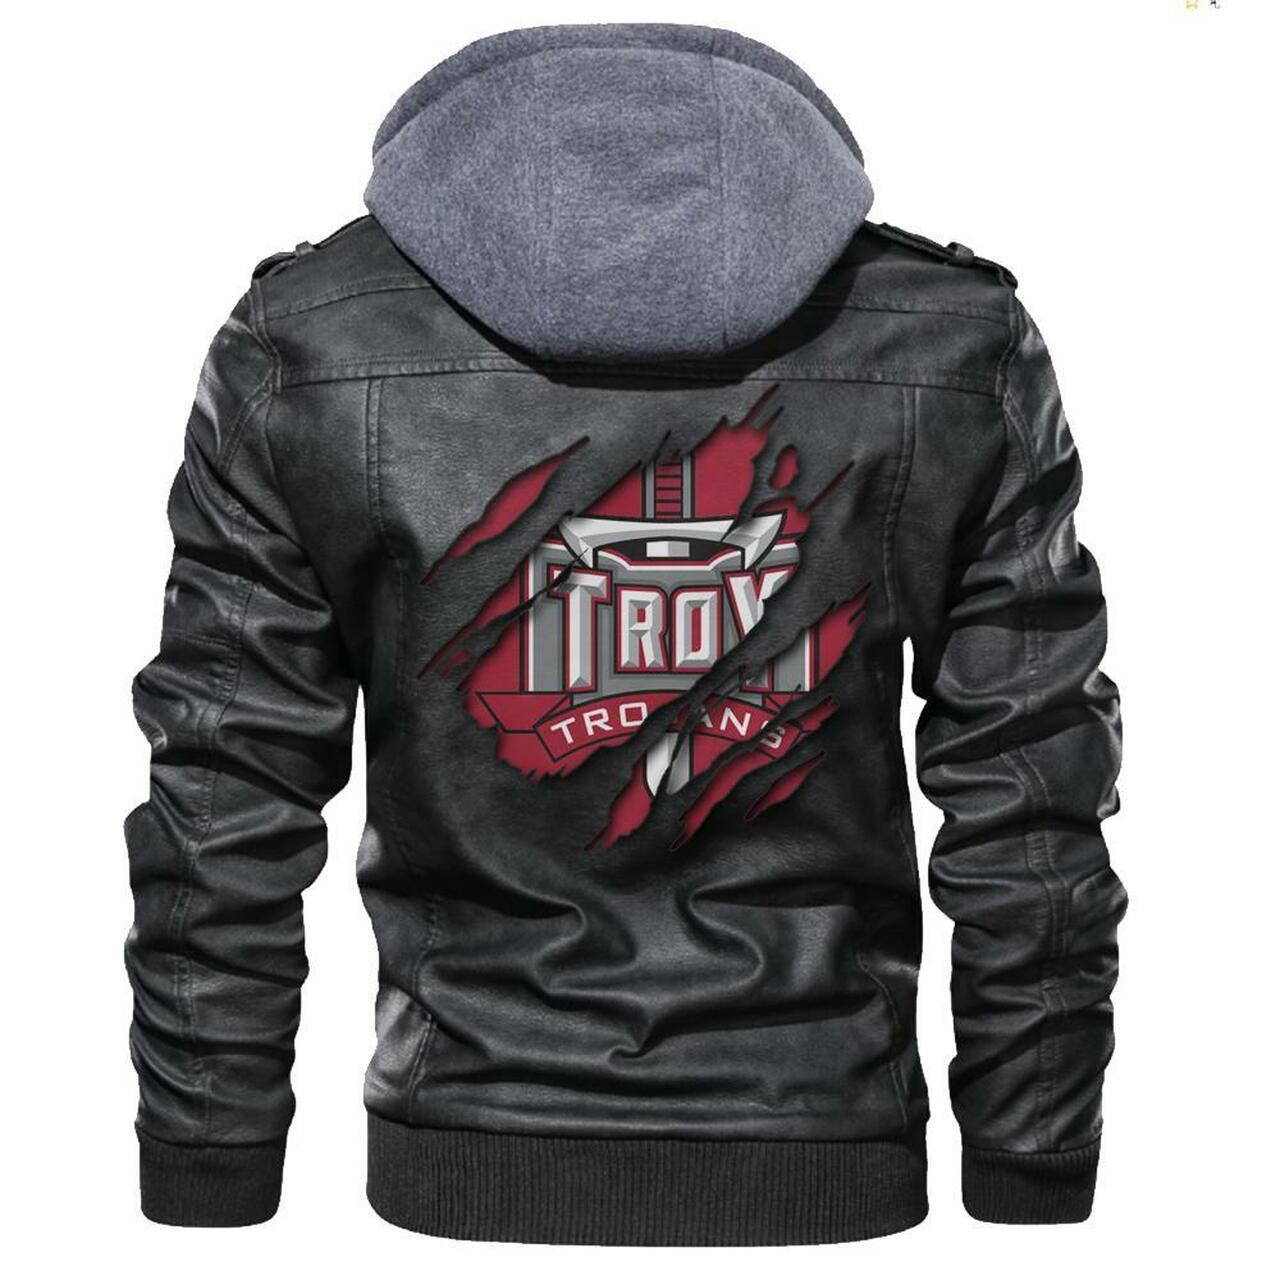 Top leather jacket Sells Best on Techcomshop 51